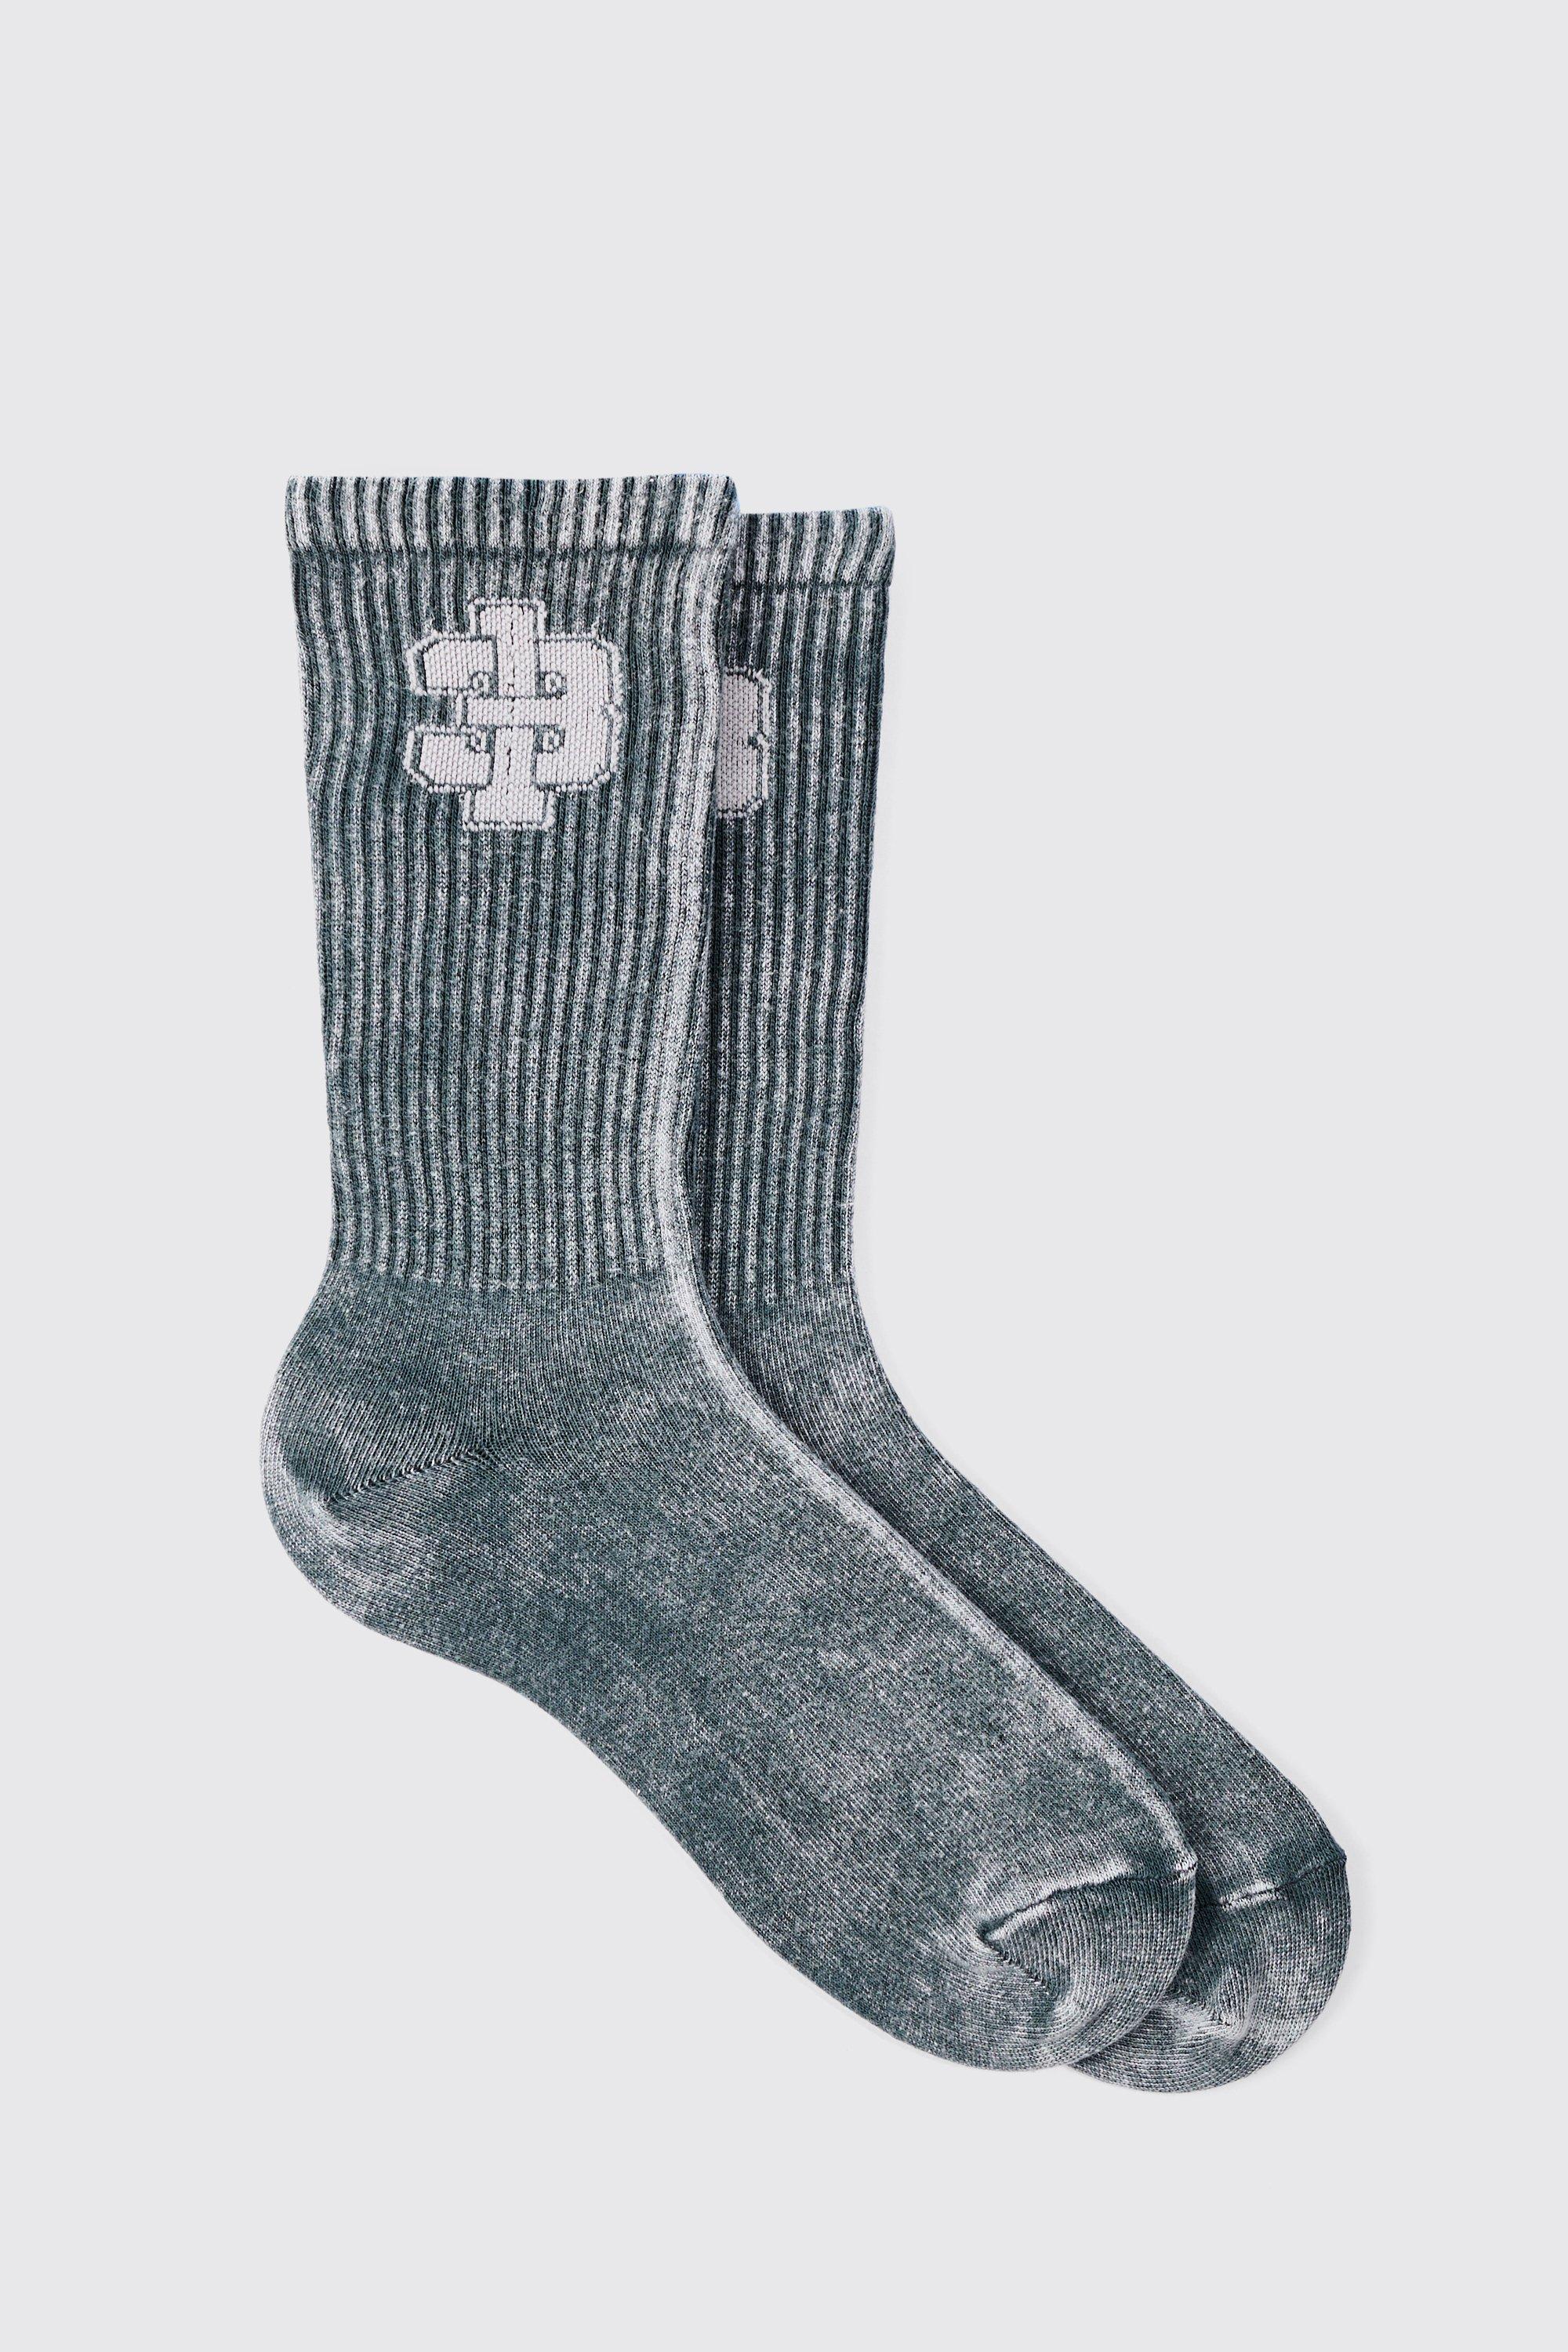 Image of Acid Wash 13 Jacquard Socks In Charcoal, Grigio